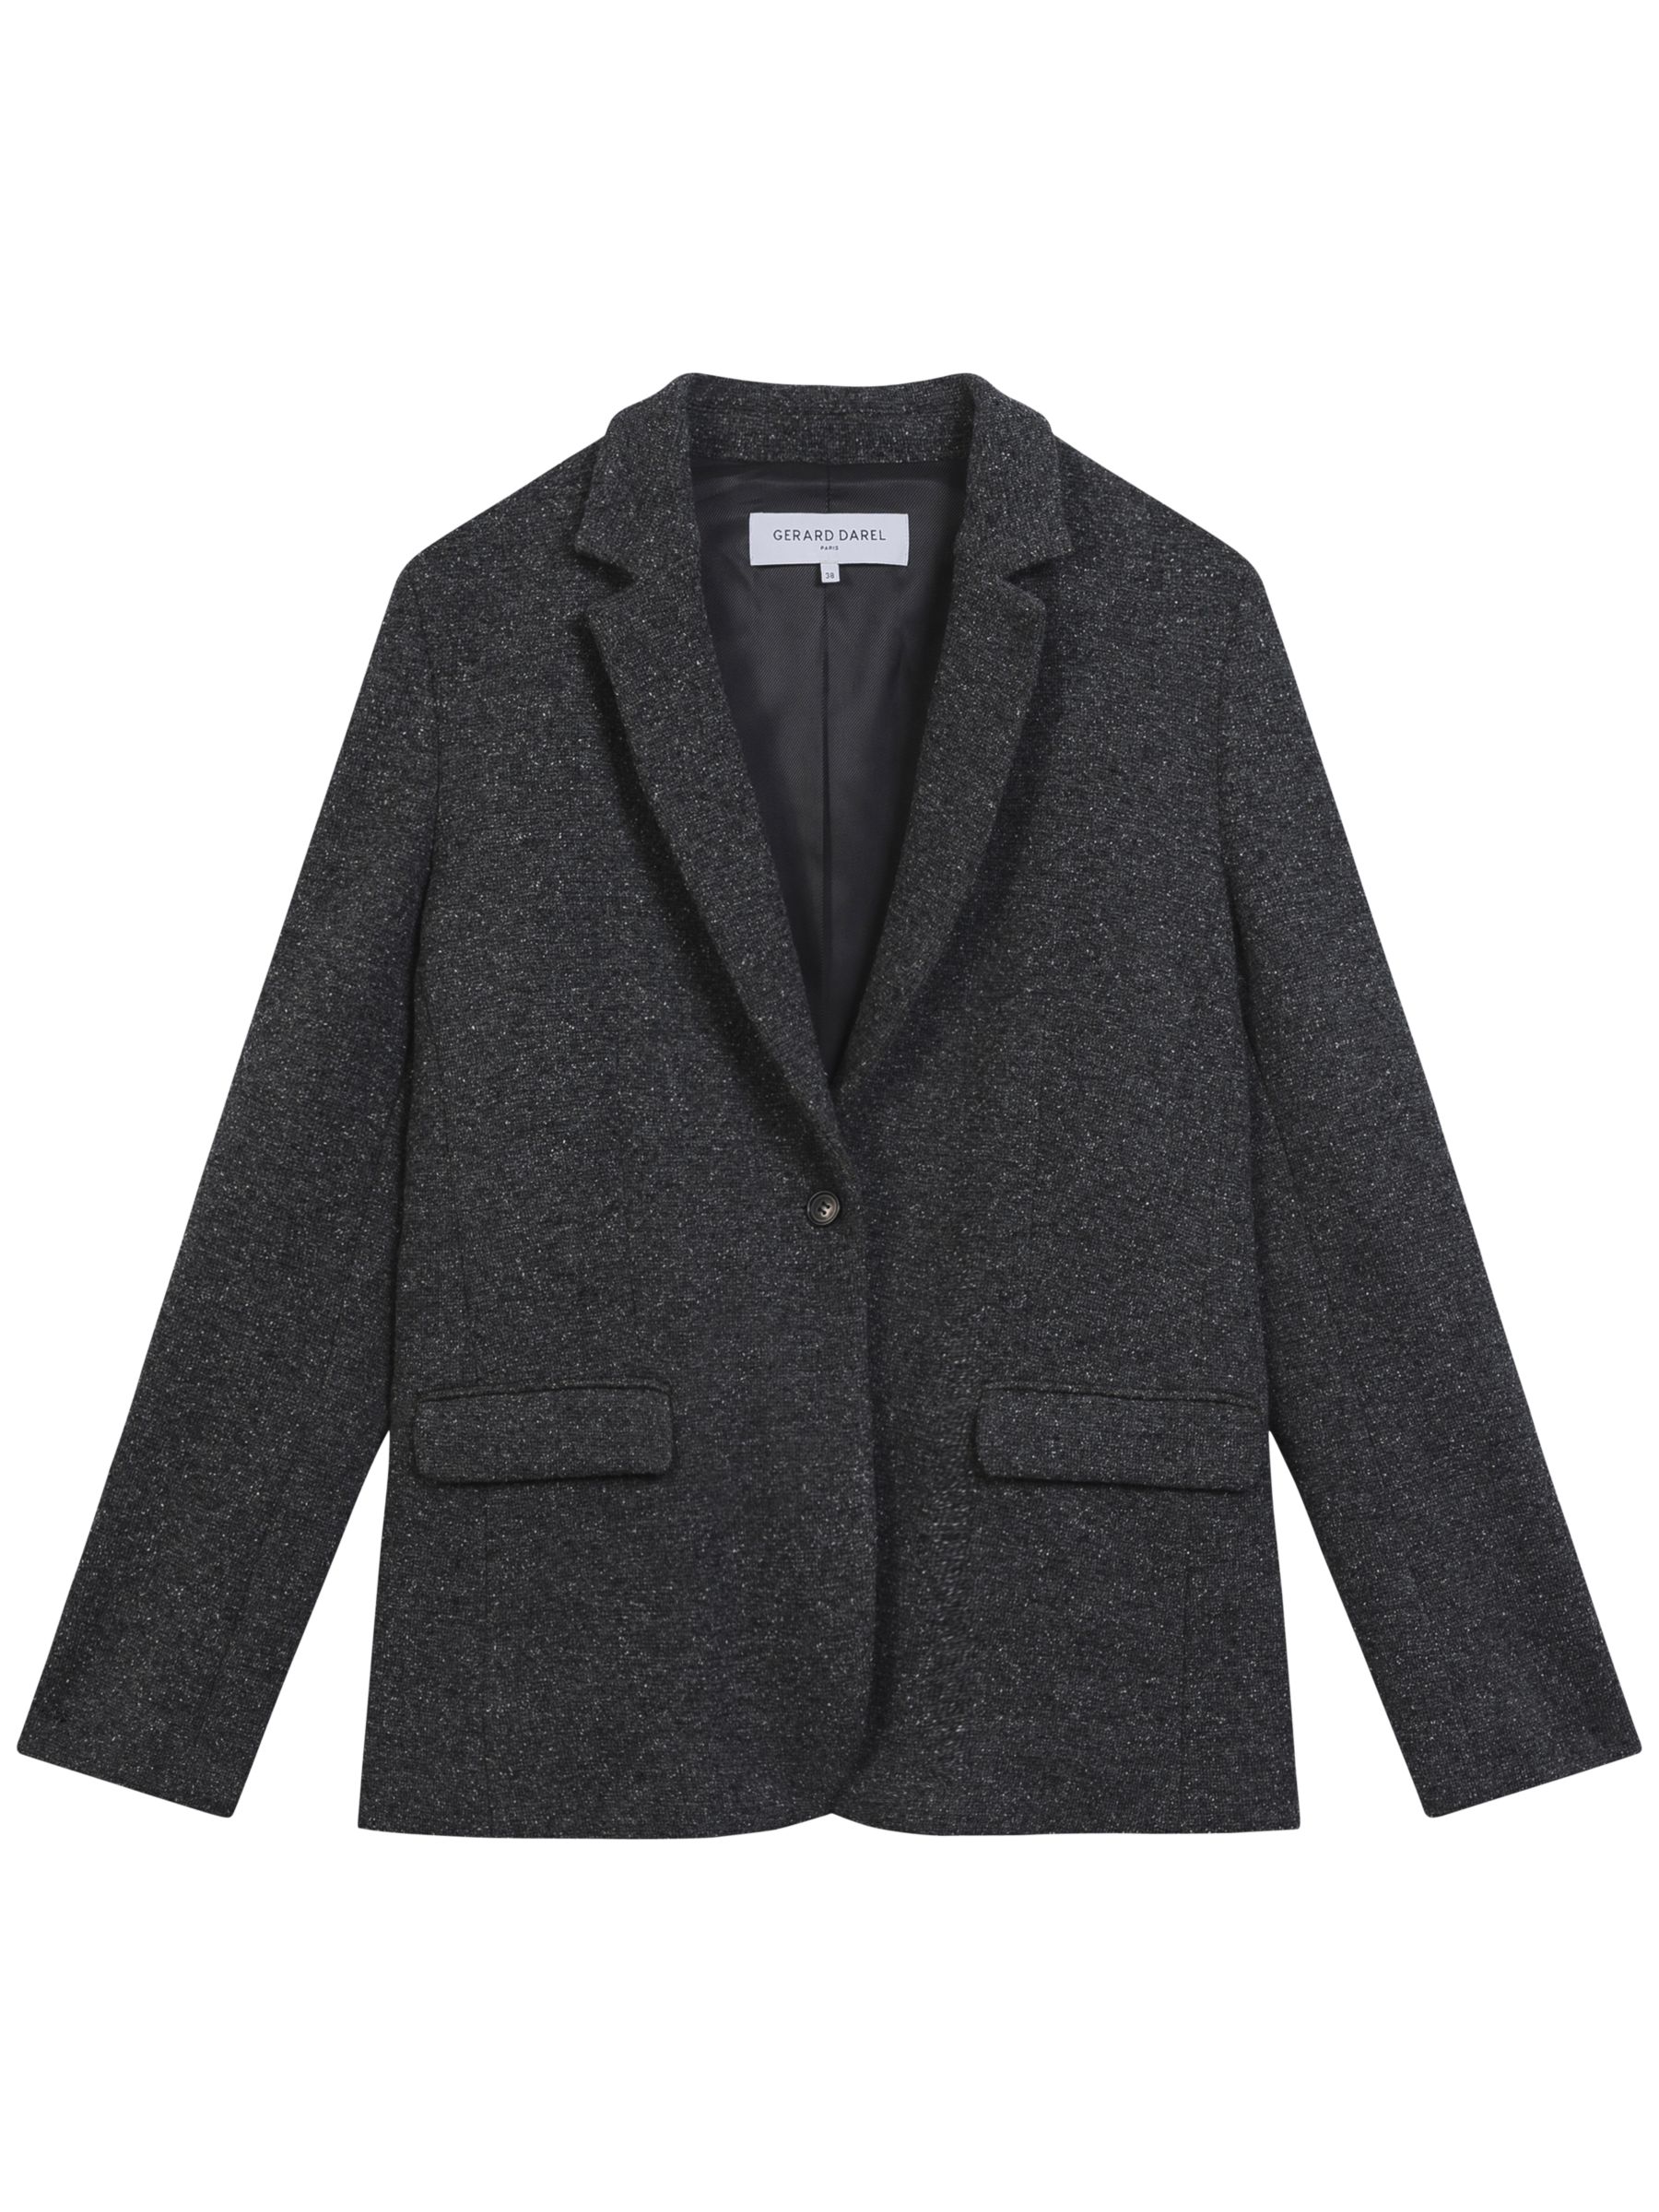 Blazers | Women's Coats & Jackets | John Lewis